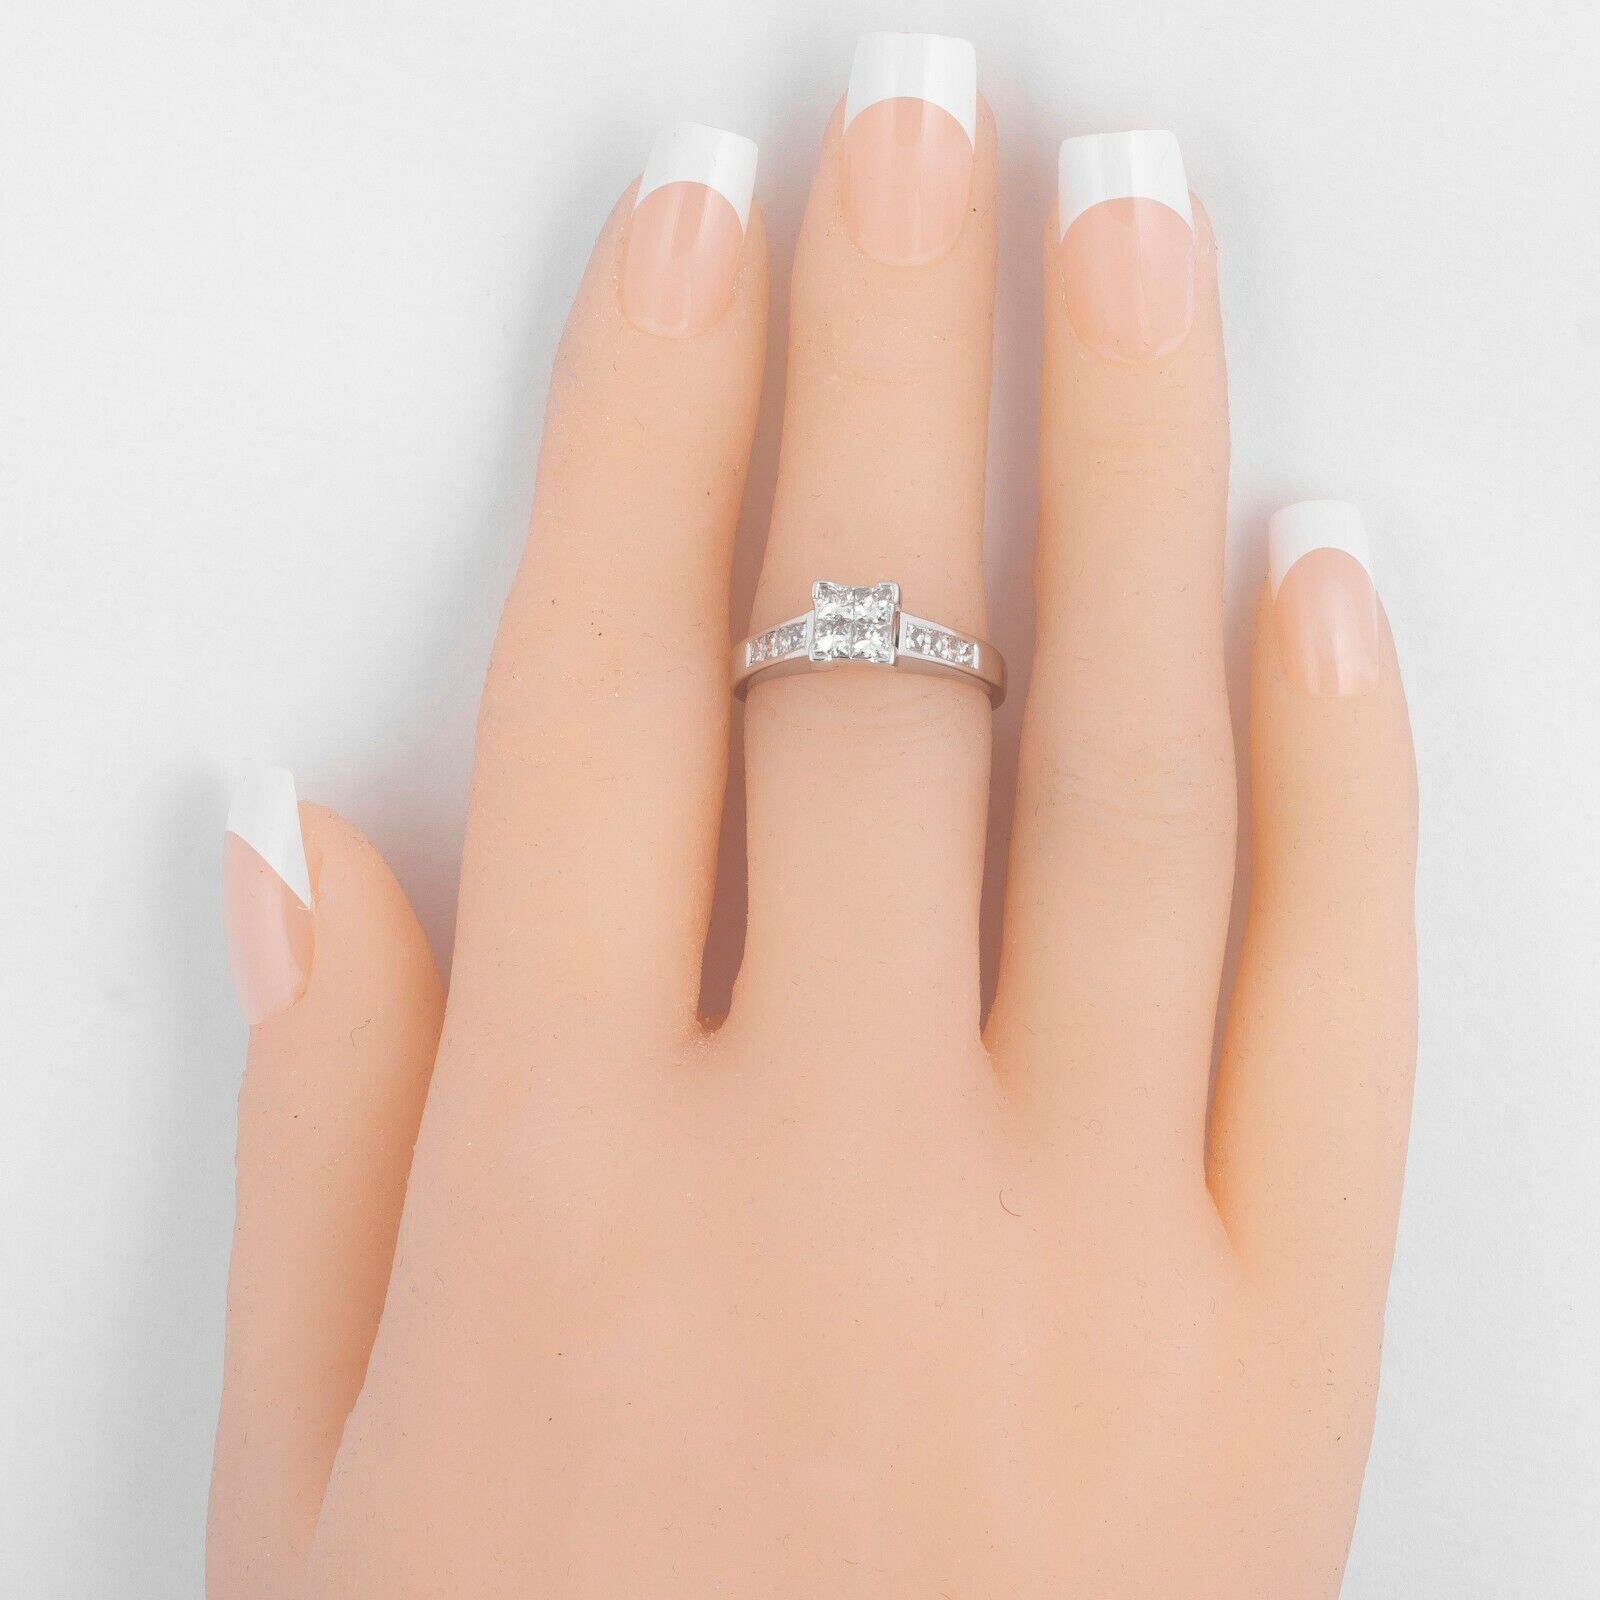 14k White Gold Four Stone Princess Cut Diamond Ring w/ accents 1.06ctw size 7.75